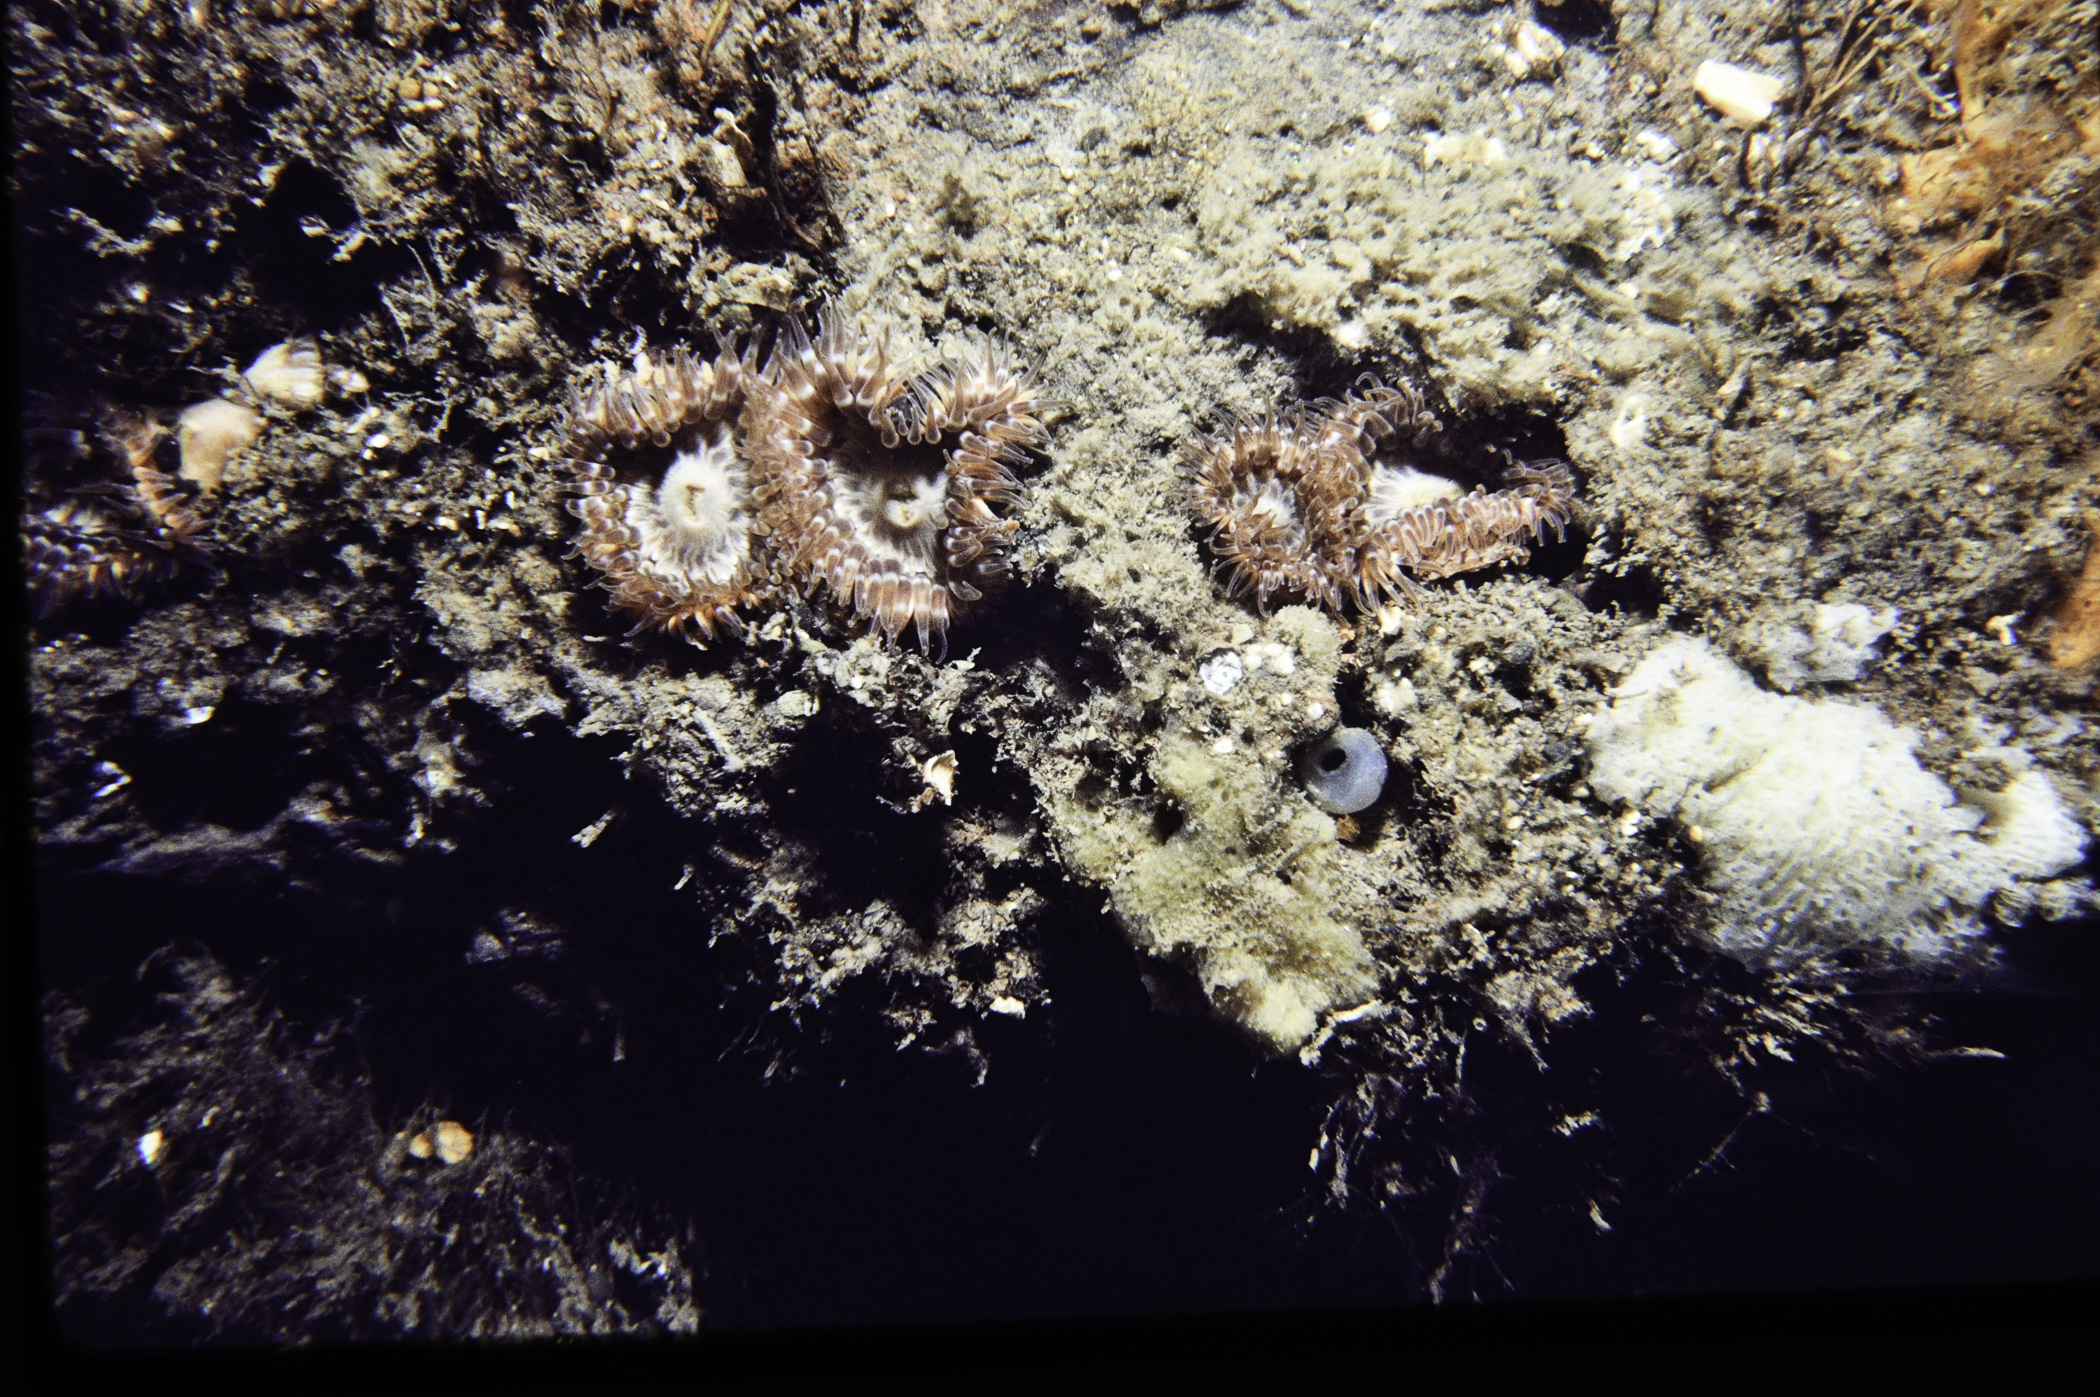 Clathrina coriacea, Cylista elegans. Site: Blockhouse Is, Carlingford Lough. 